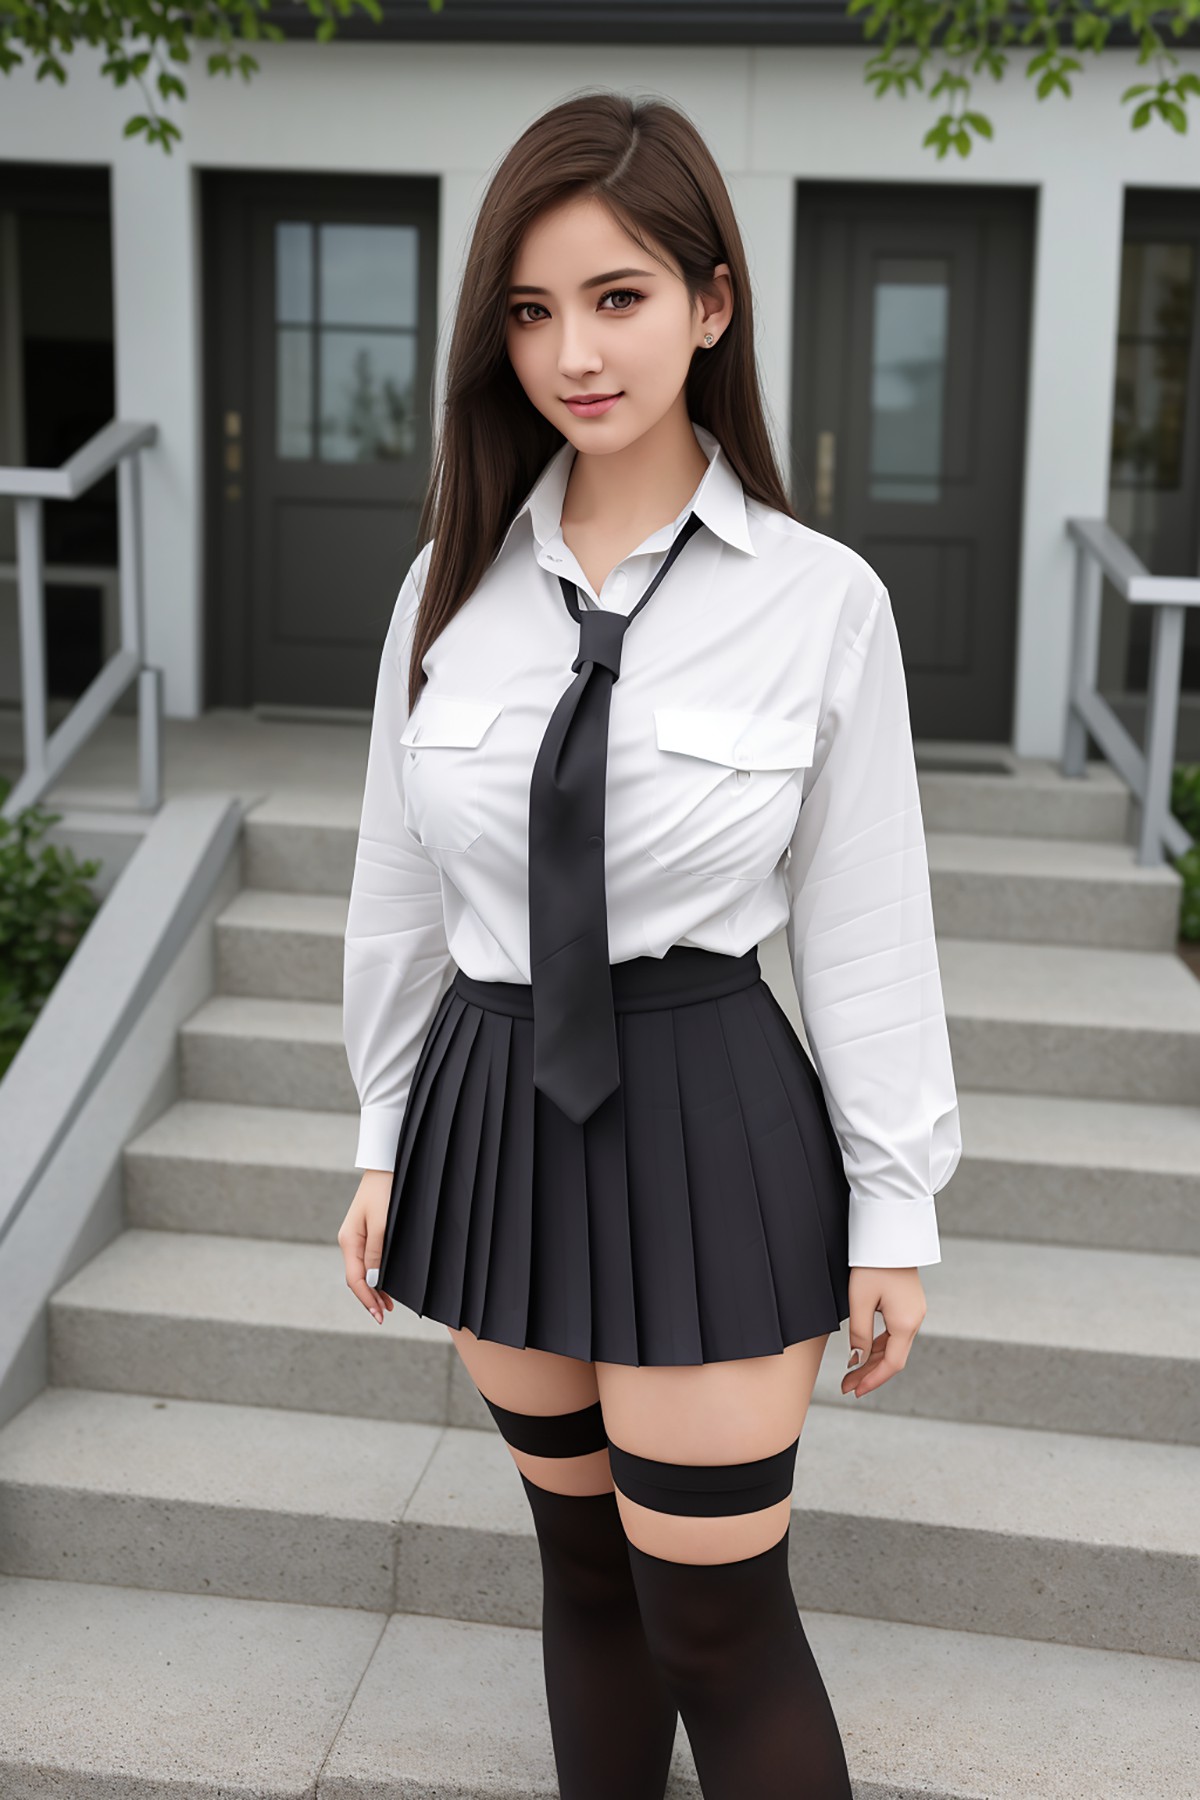 AIModel Vol 133 Sexy White Shirt With Black Short Skirt 0025 9459633581.jpg